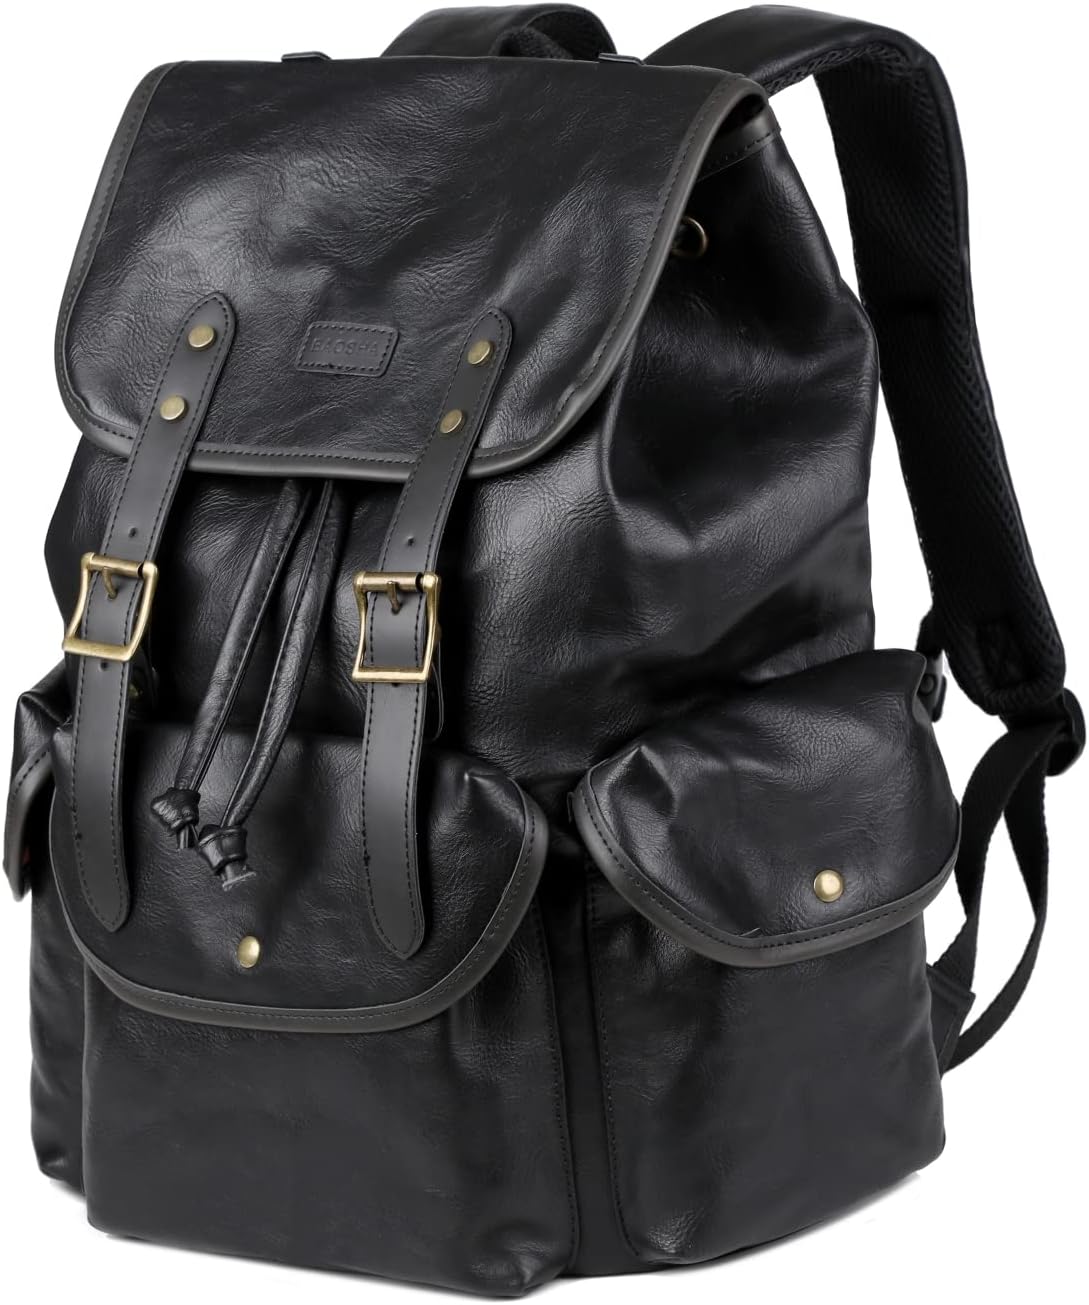 FR Fashion Co. 15.6 inch Laptop Backpack Hiking Camping Backpack Satchel Bookbag Travel Business Backpack